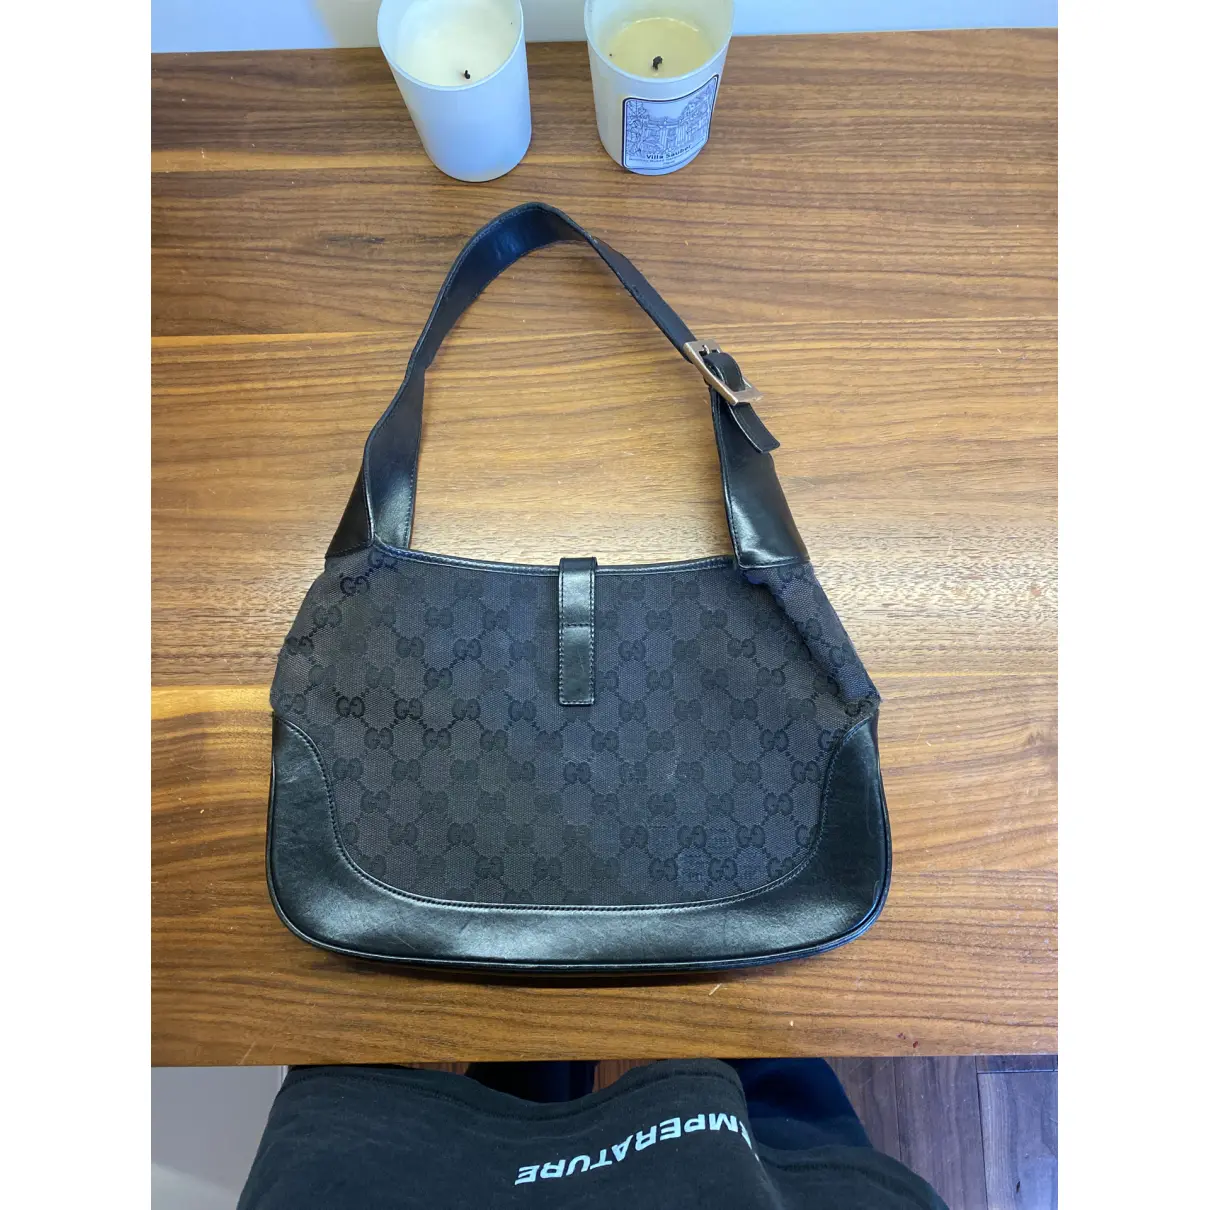 Buy Gucci Jackie Vintage leather handbag online